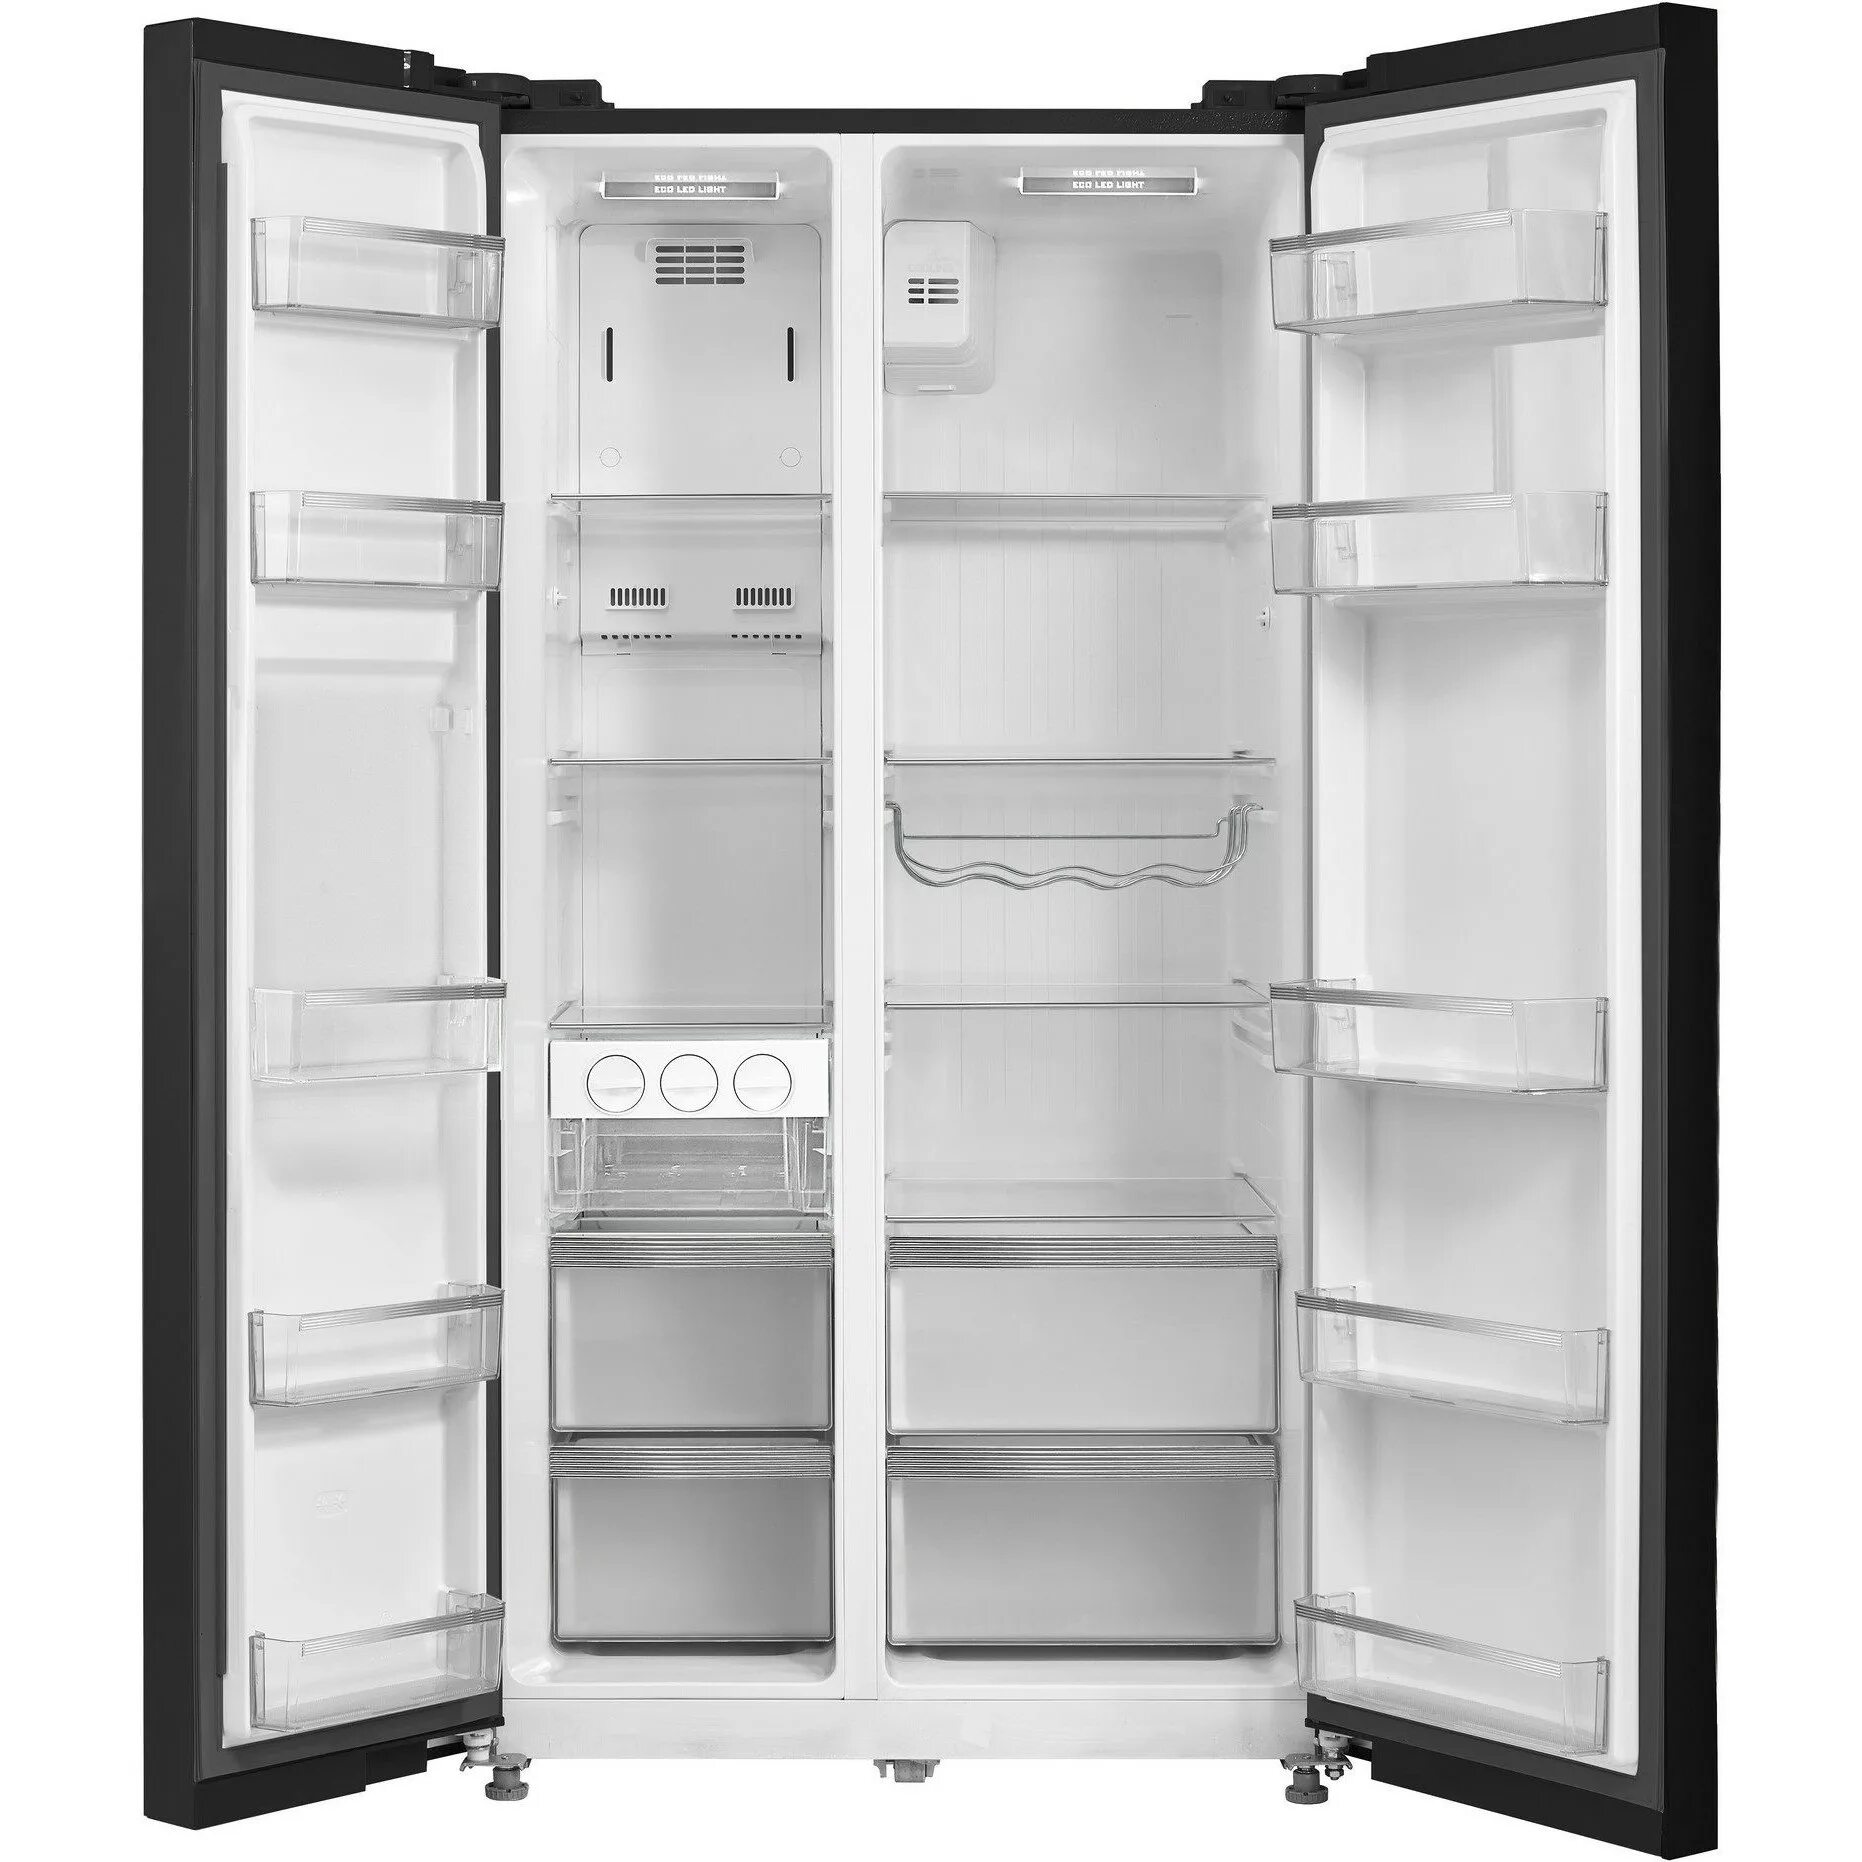 Холодильник DEXP RF-mn520dma/bi. Холодильник DEXP sbs510m. Холодильник DEXP Side by Side. Холодильник дексп черный ДНС. Дексп холодильник купить